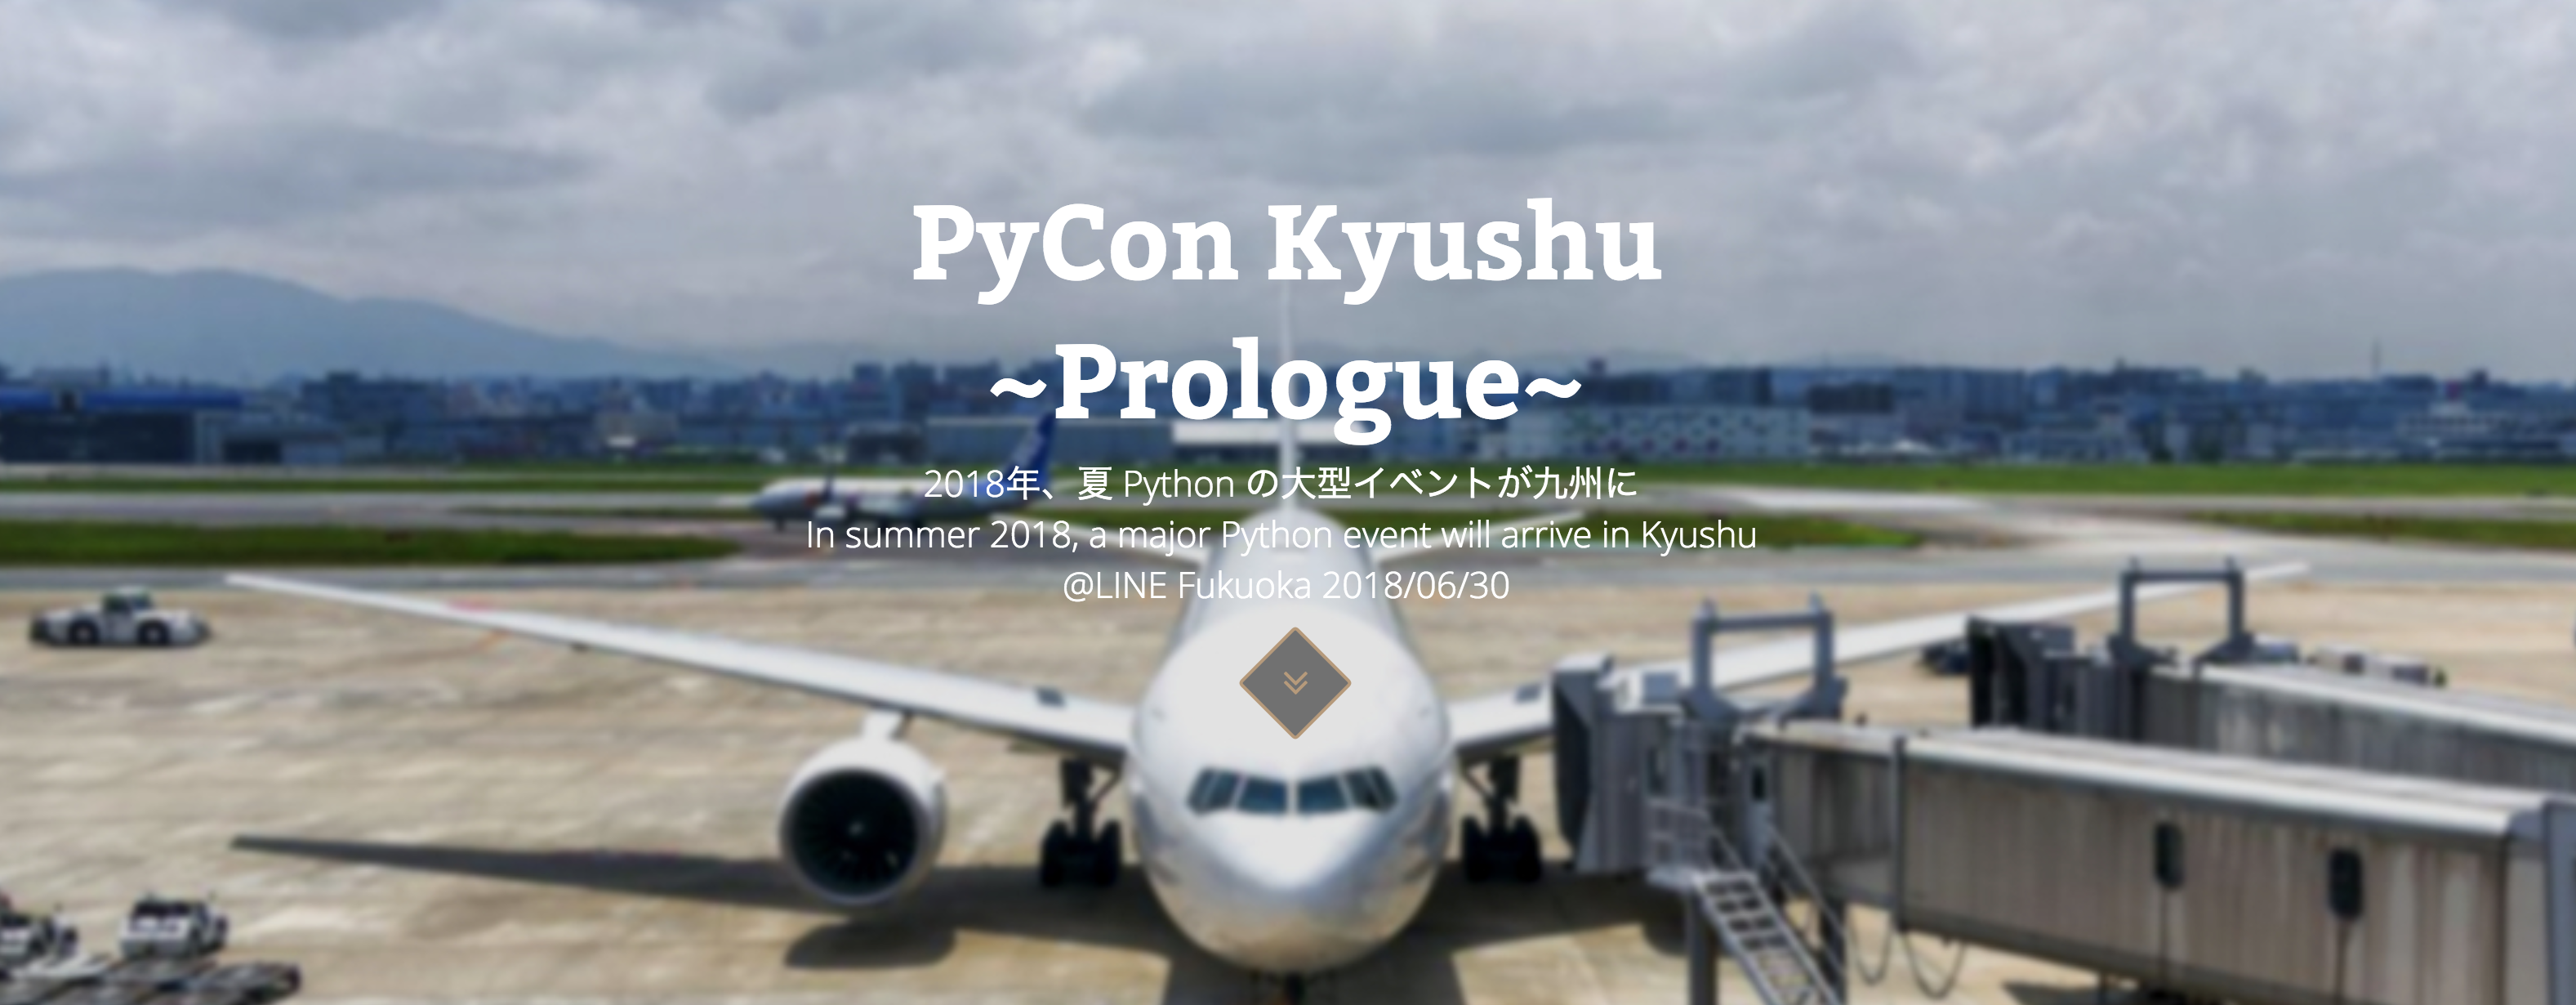 PyCon Kyusyu サムネイル